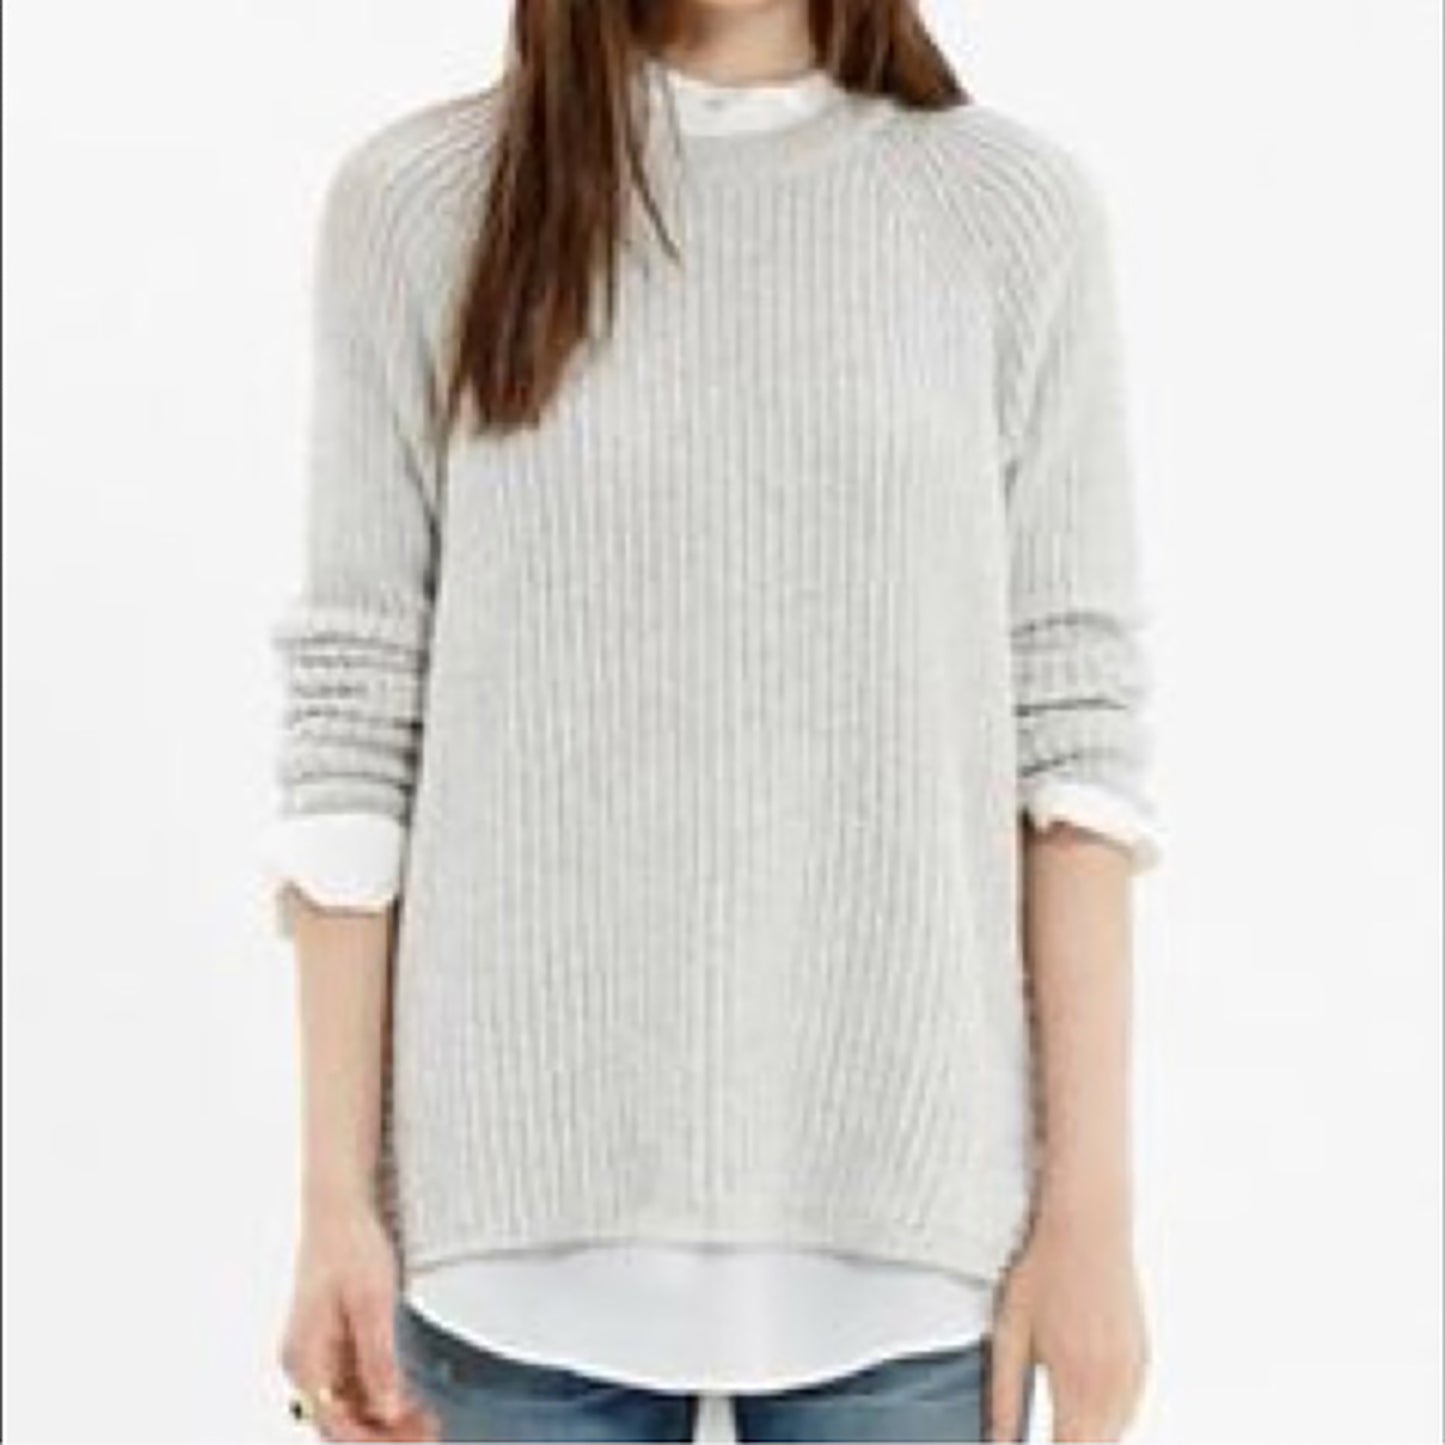 Madewell Tracklist Side Zipper Sweater - size Medium